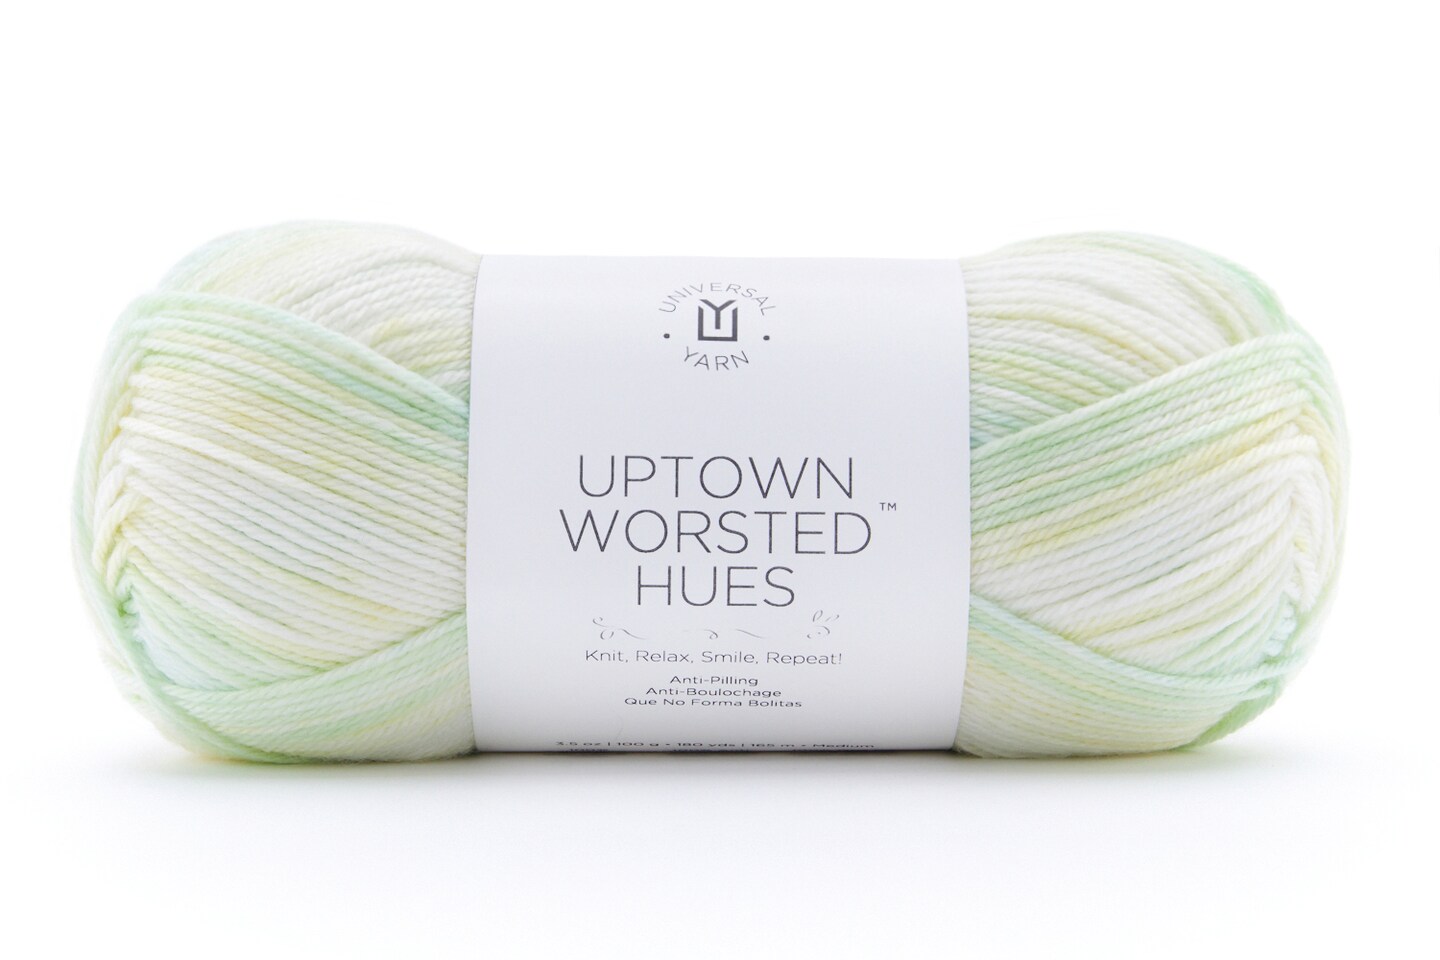 Uptown Worsted Hues by Universal Yarn - 100% Acrylic Yarn - #3308 Key Lime Pie